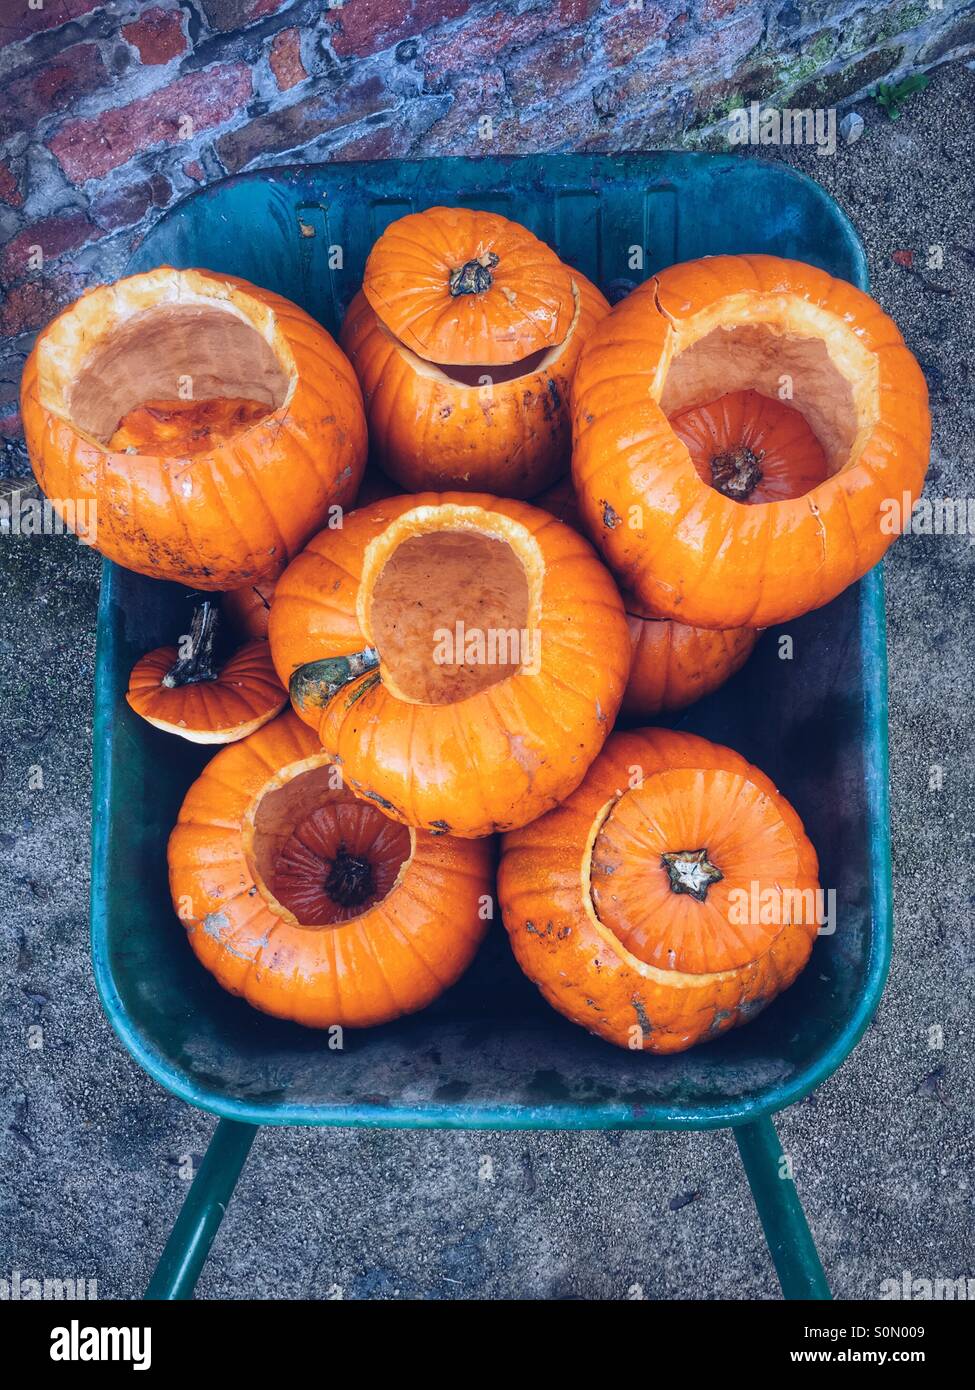 Pumpkins in wheelbarrow. Stock Photo